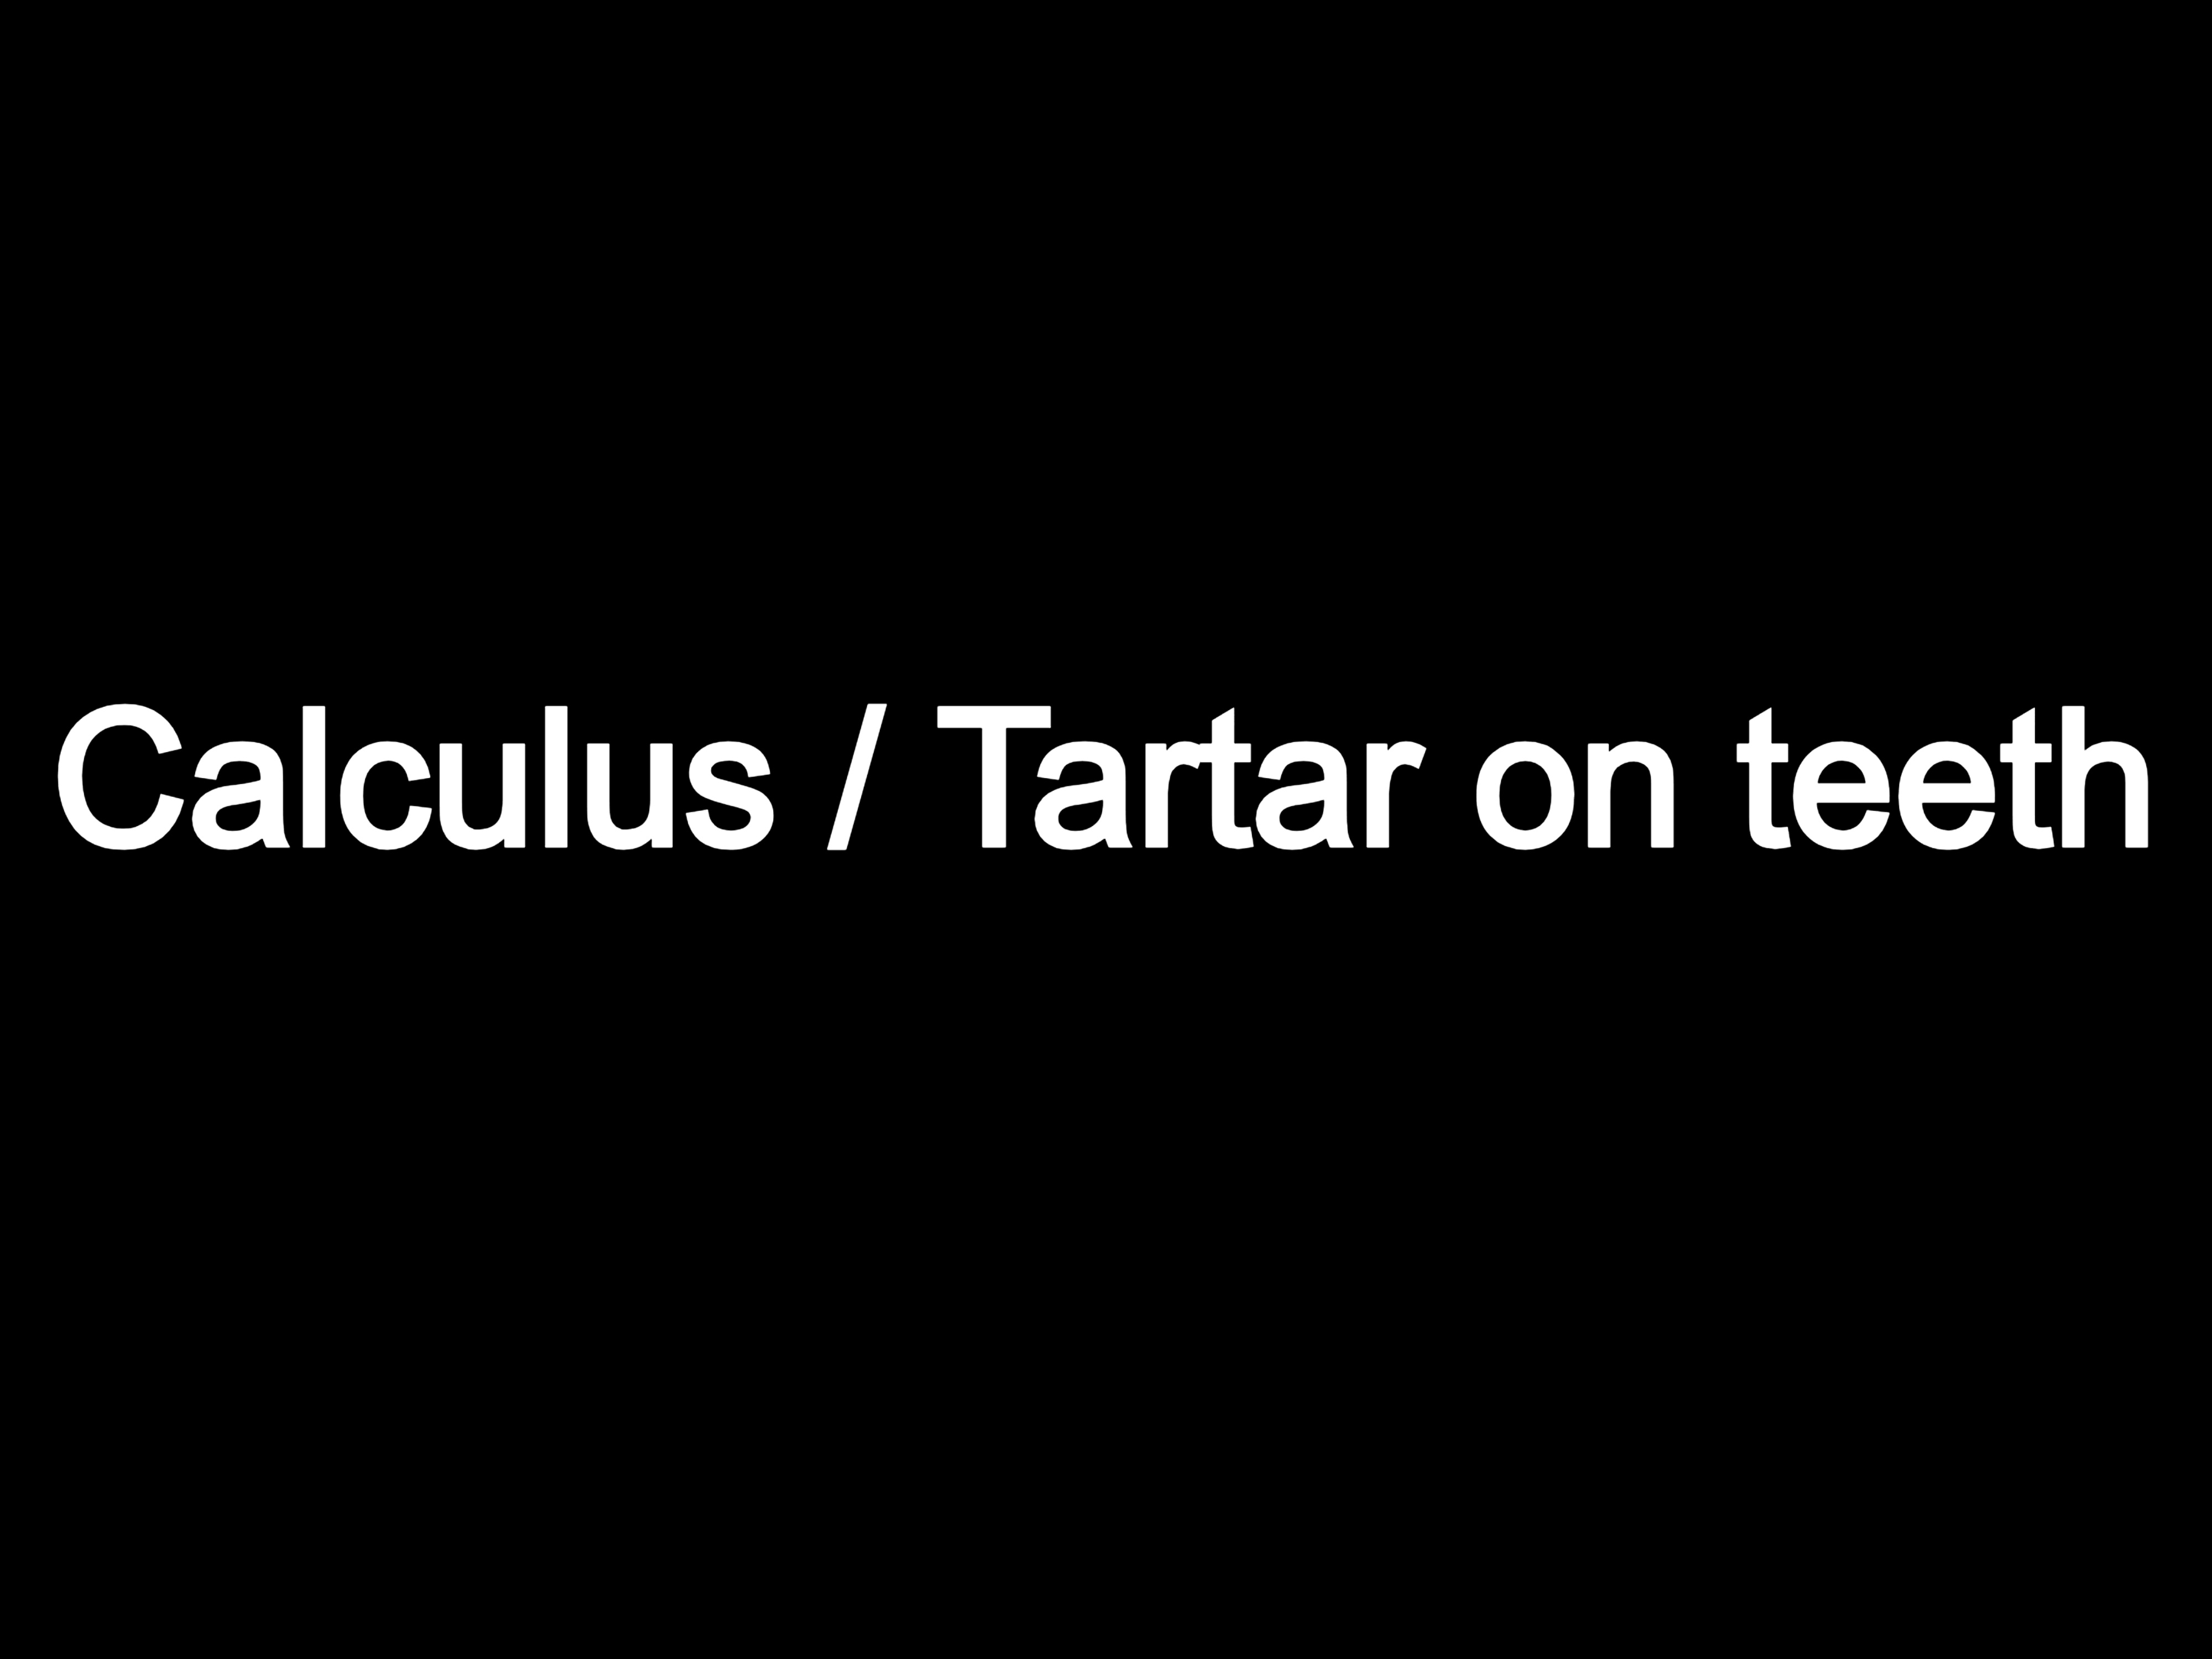 Calculus / Tartar on teeth